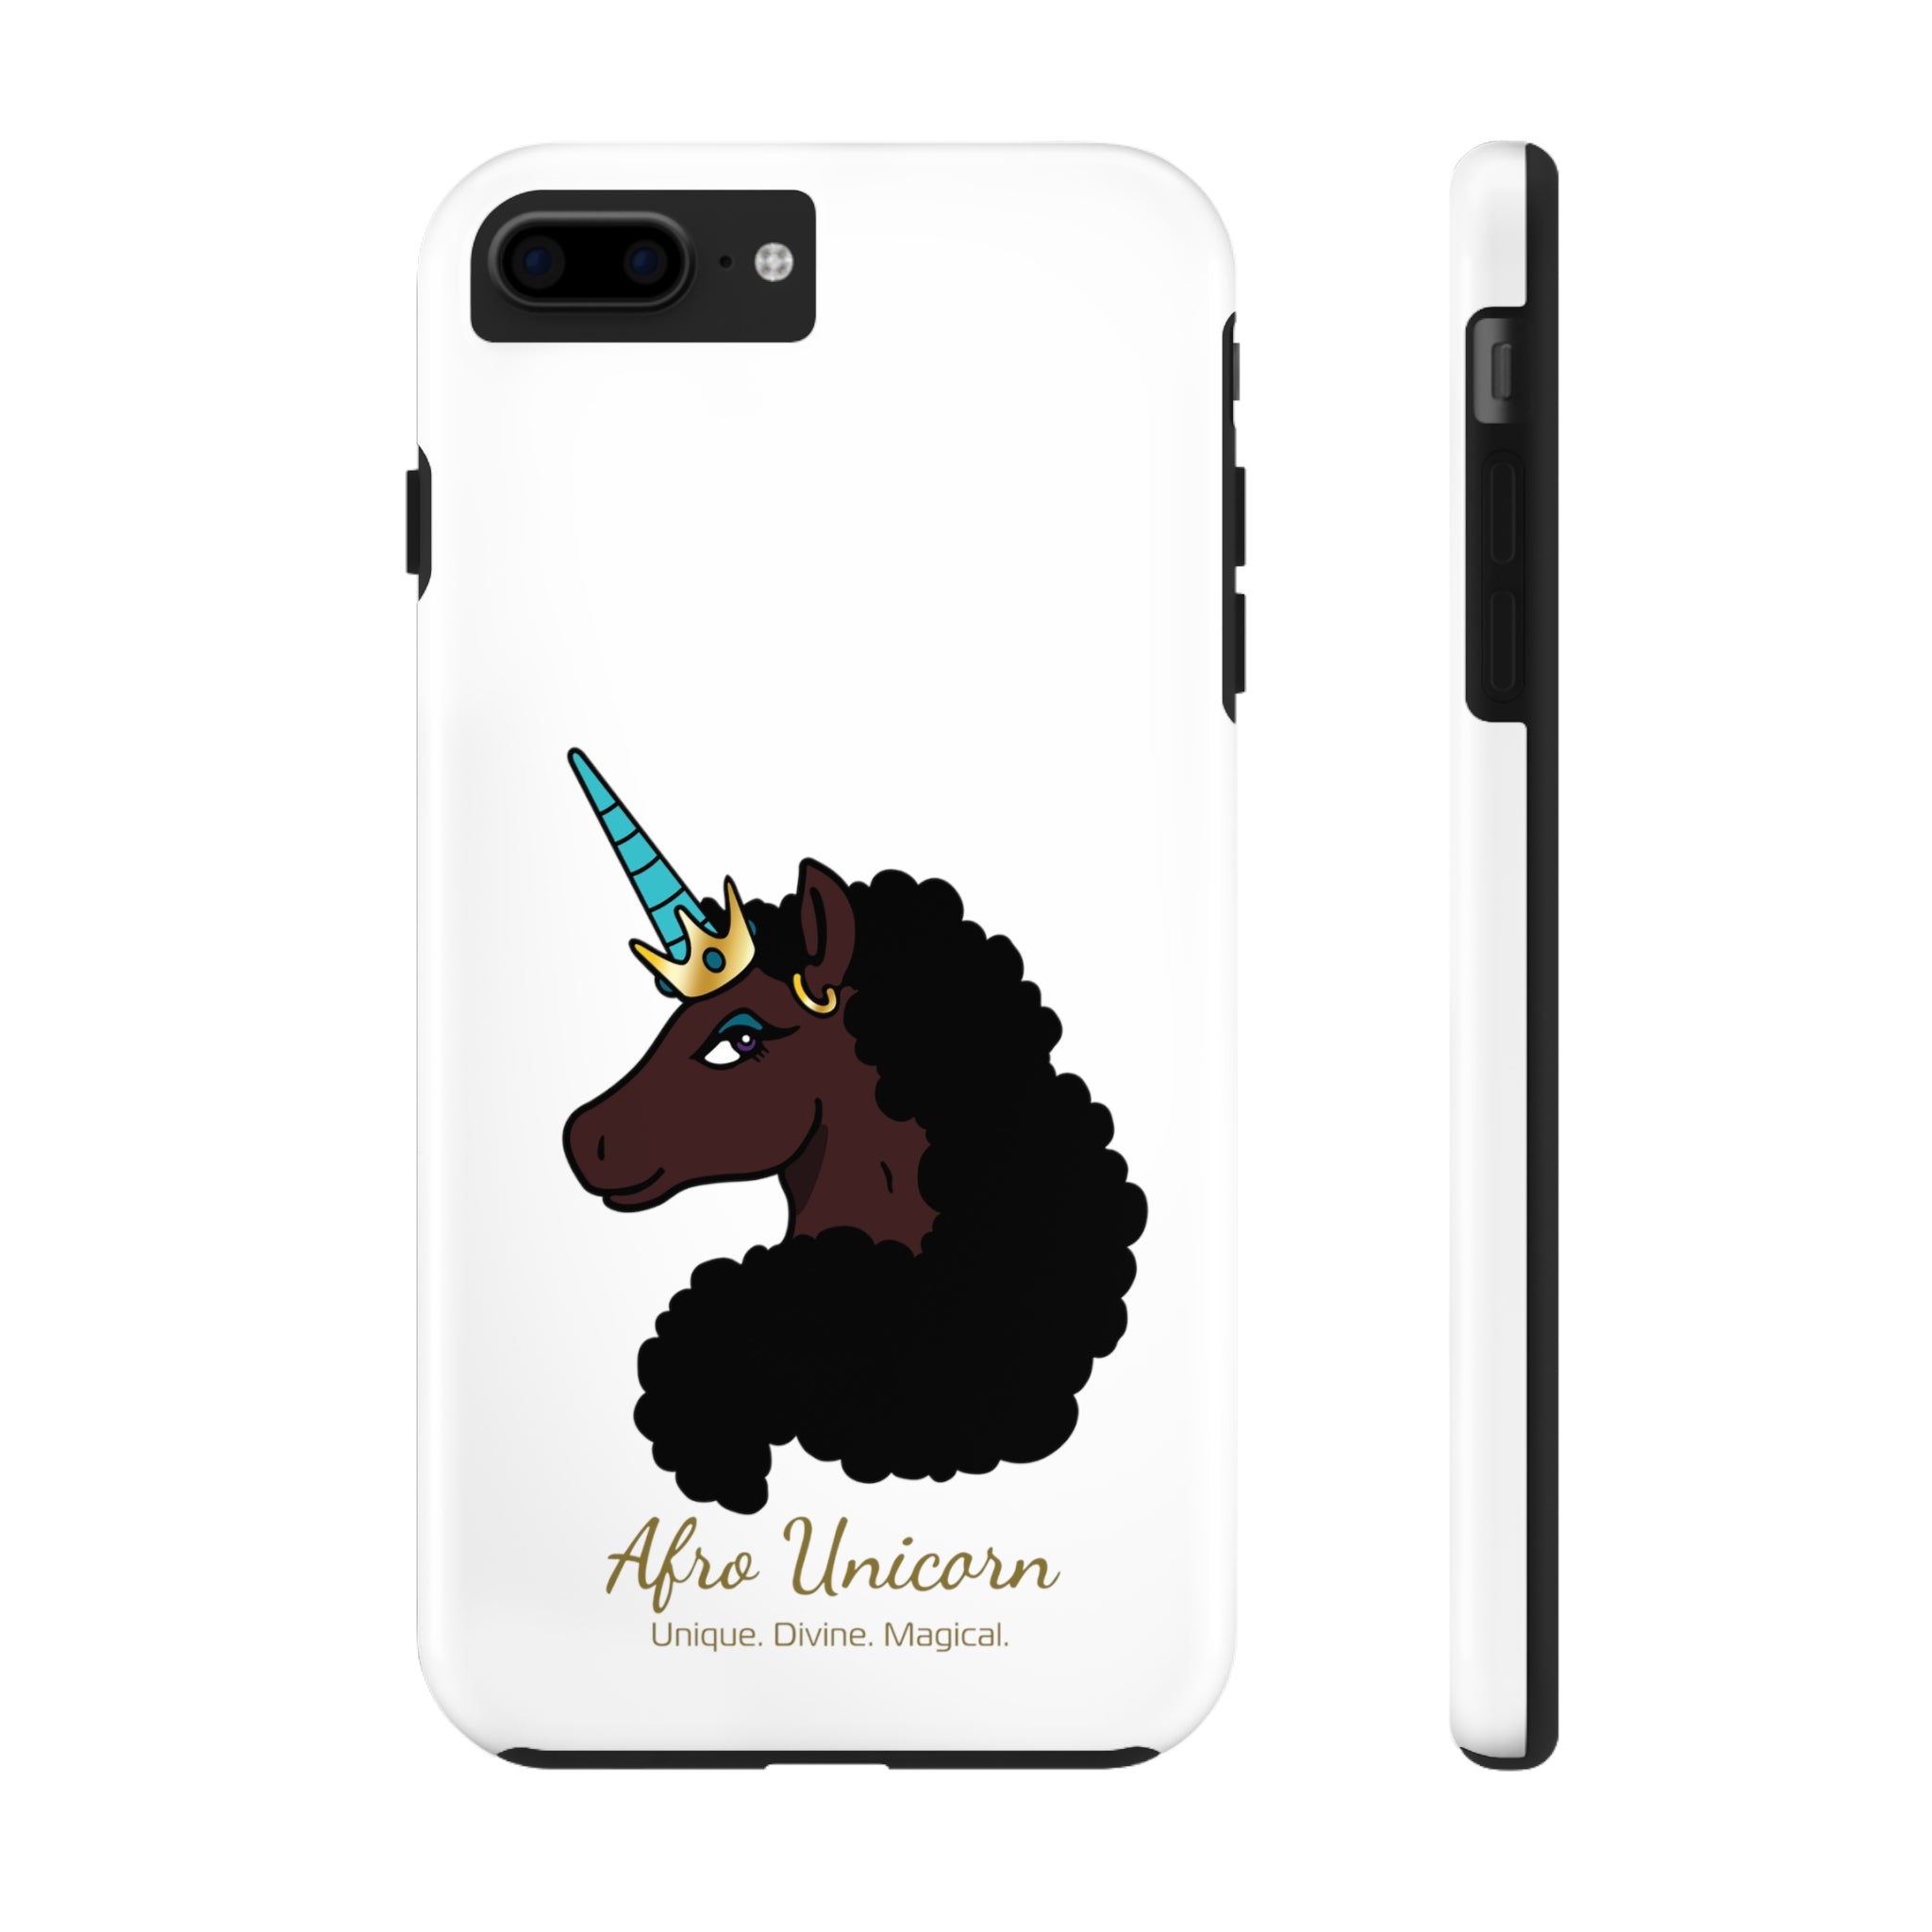 Afro Unicorn Tough Phone Cases - Mocha